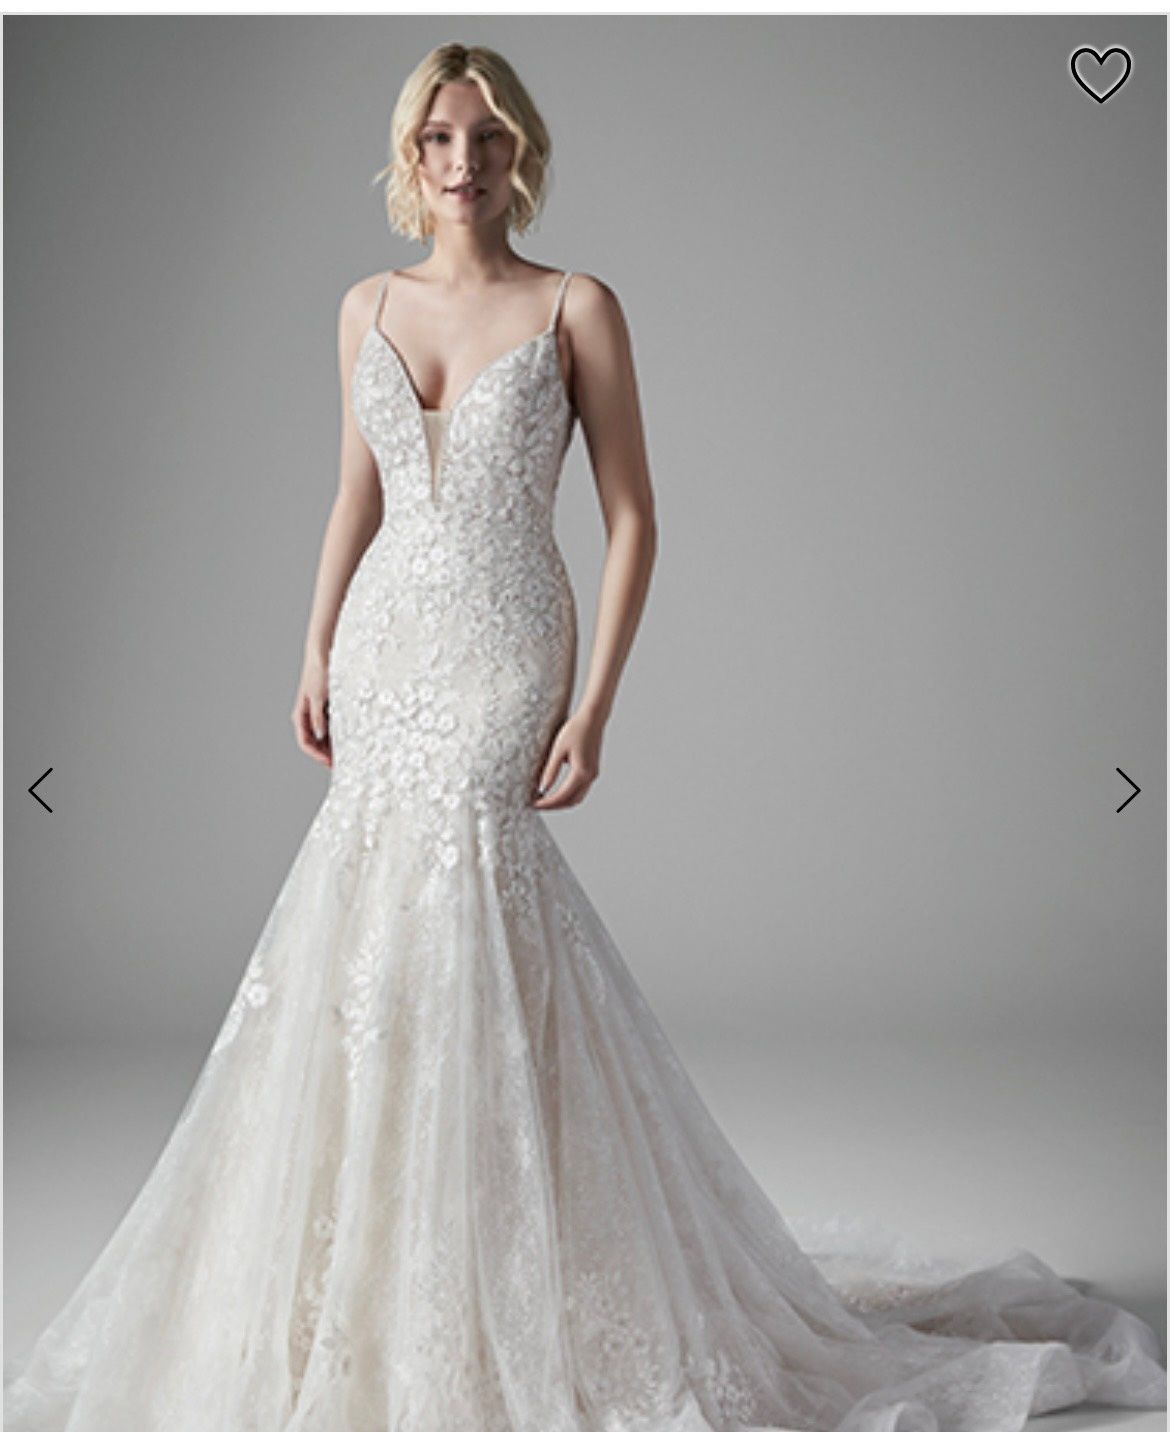 Plus Size 18 Wedding Plunge White Mermaid Dress on Queenly